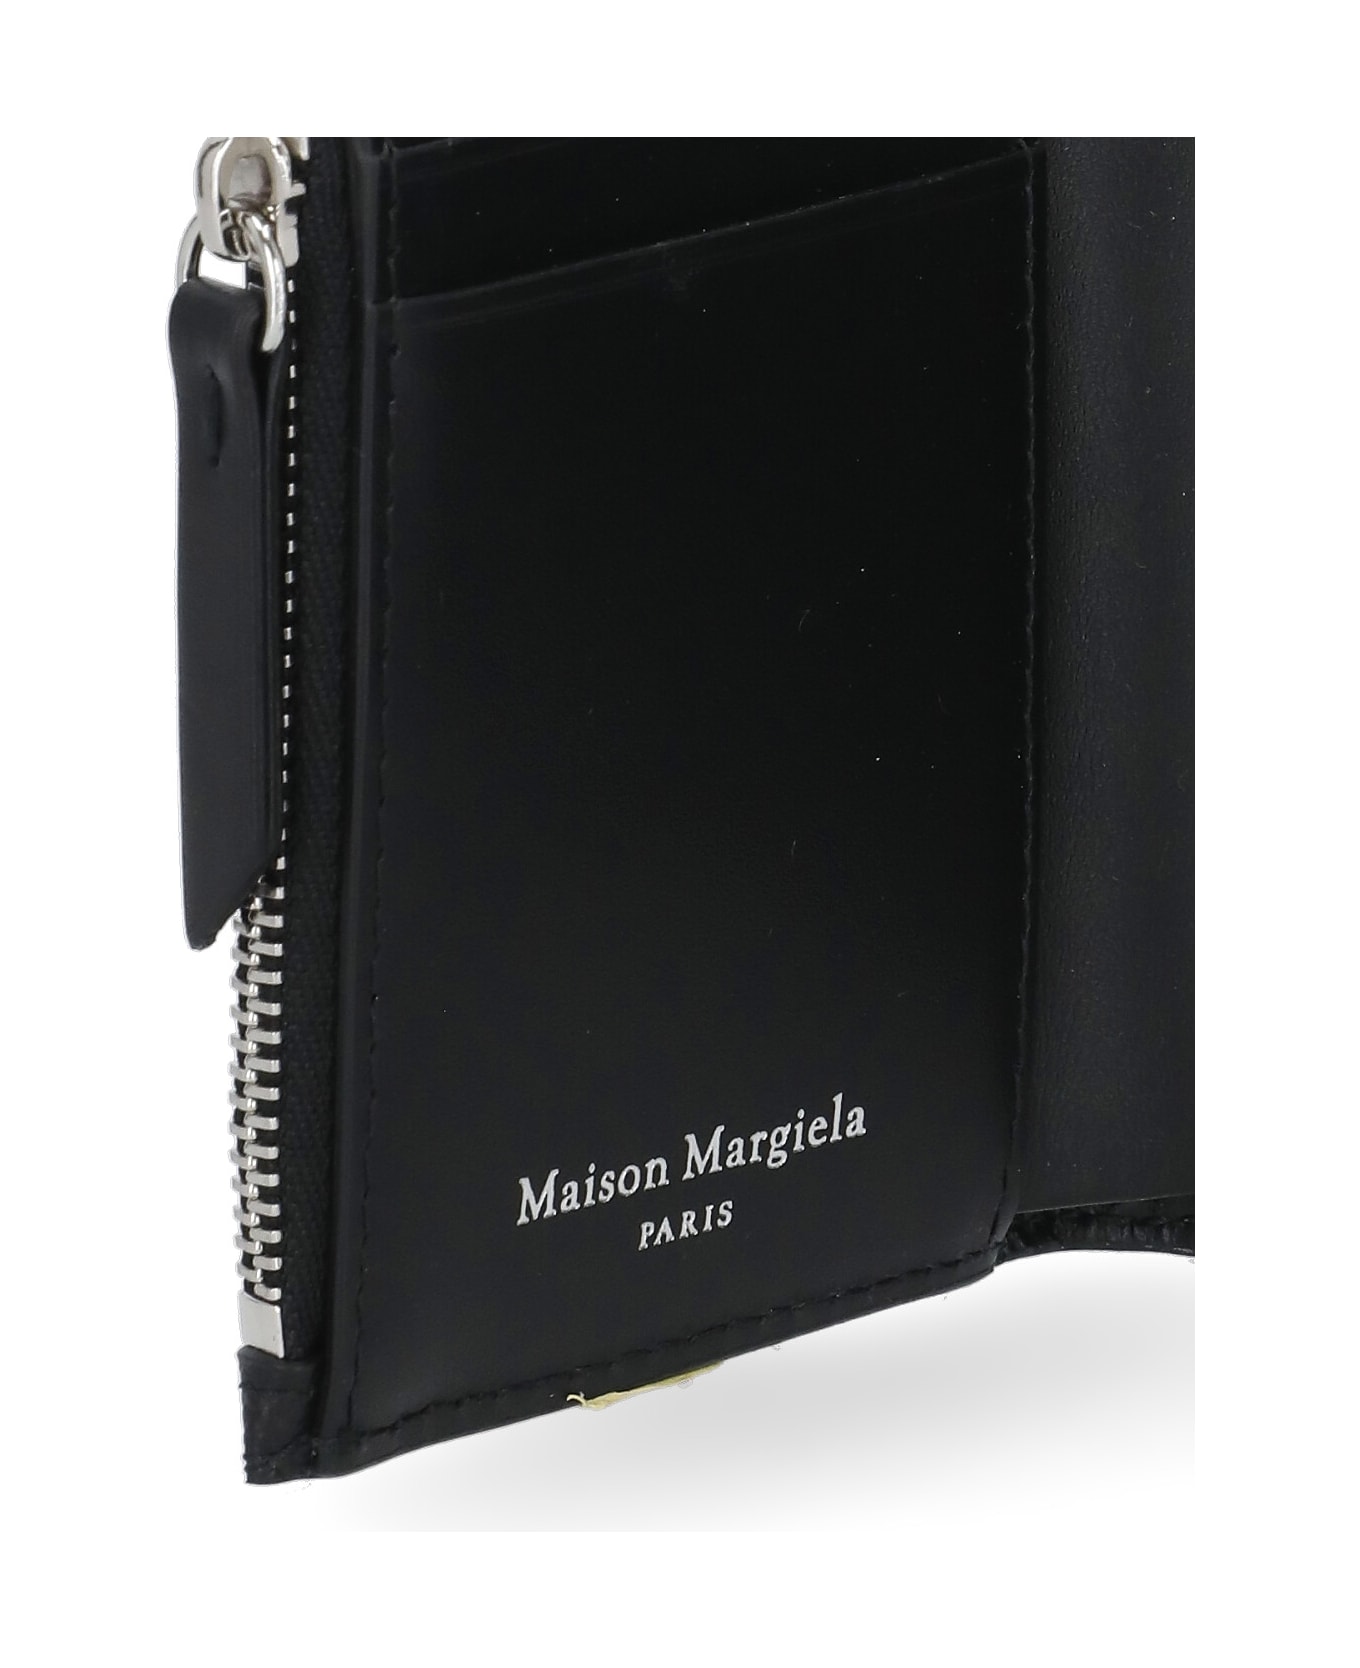 Maison Margiela Four Stitches Wallet - Black